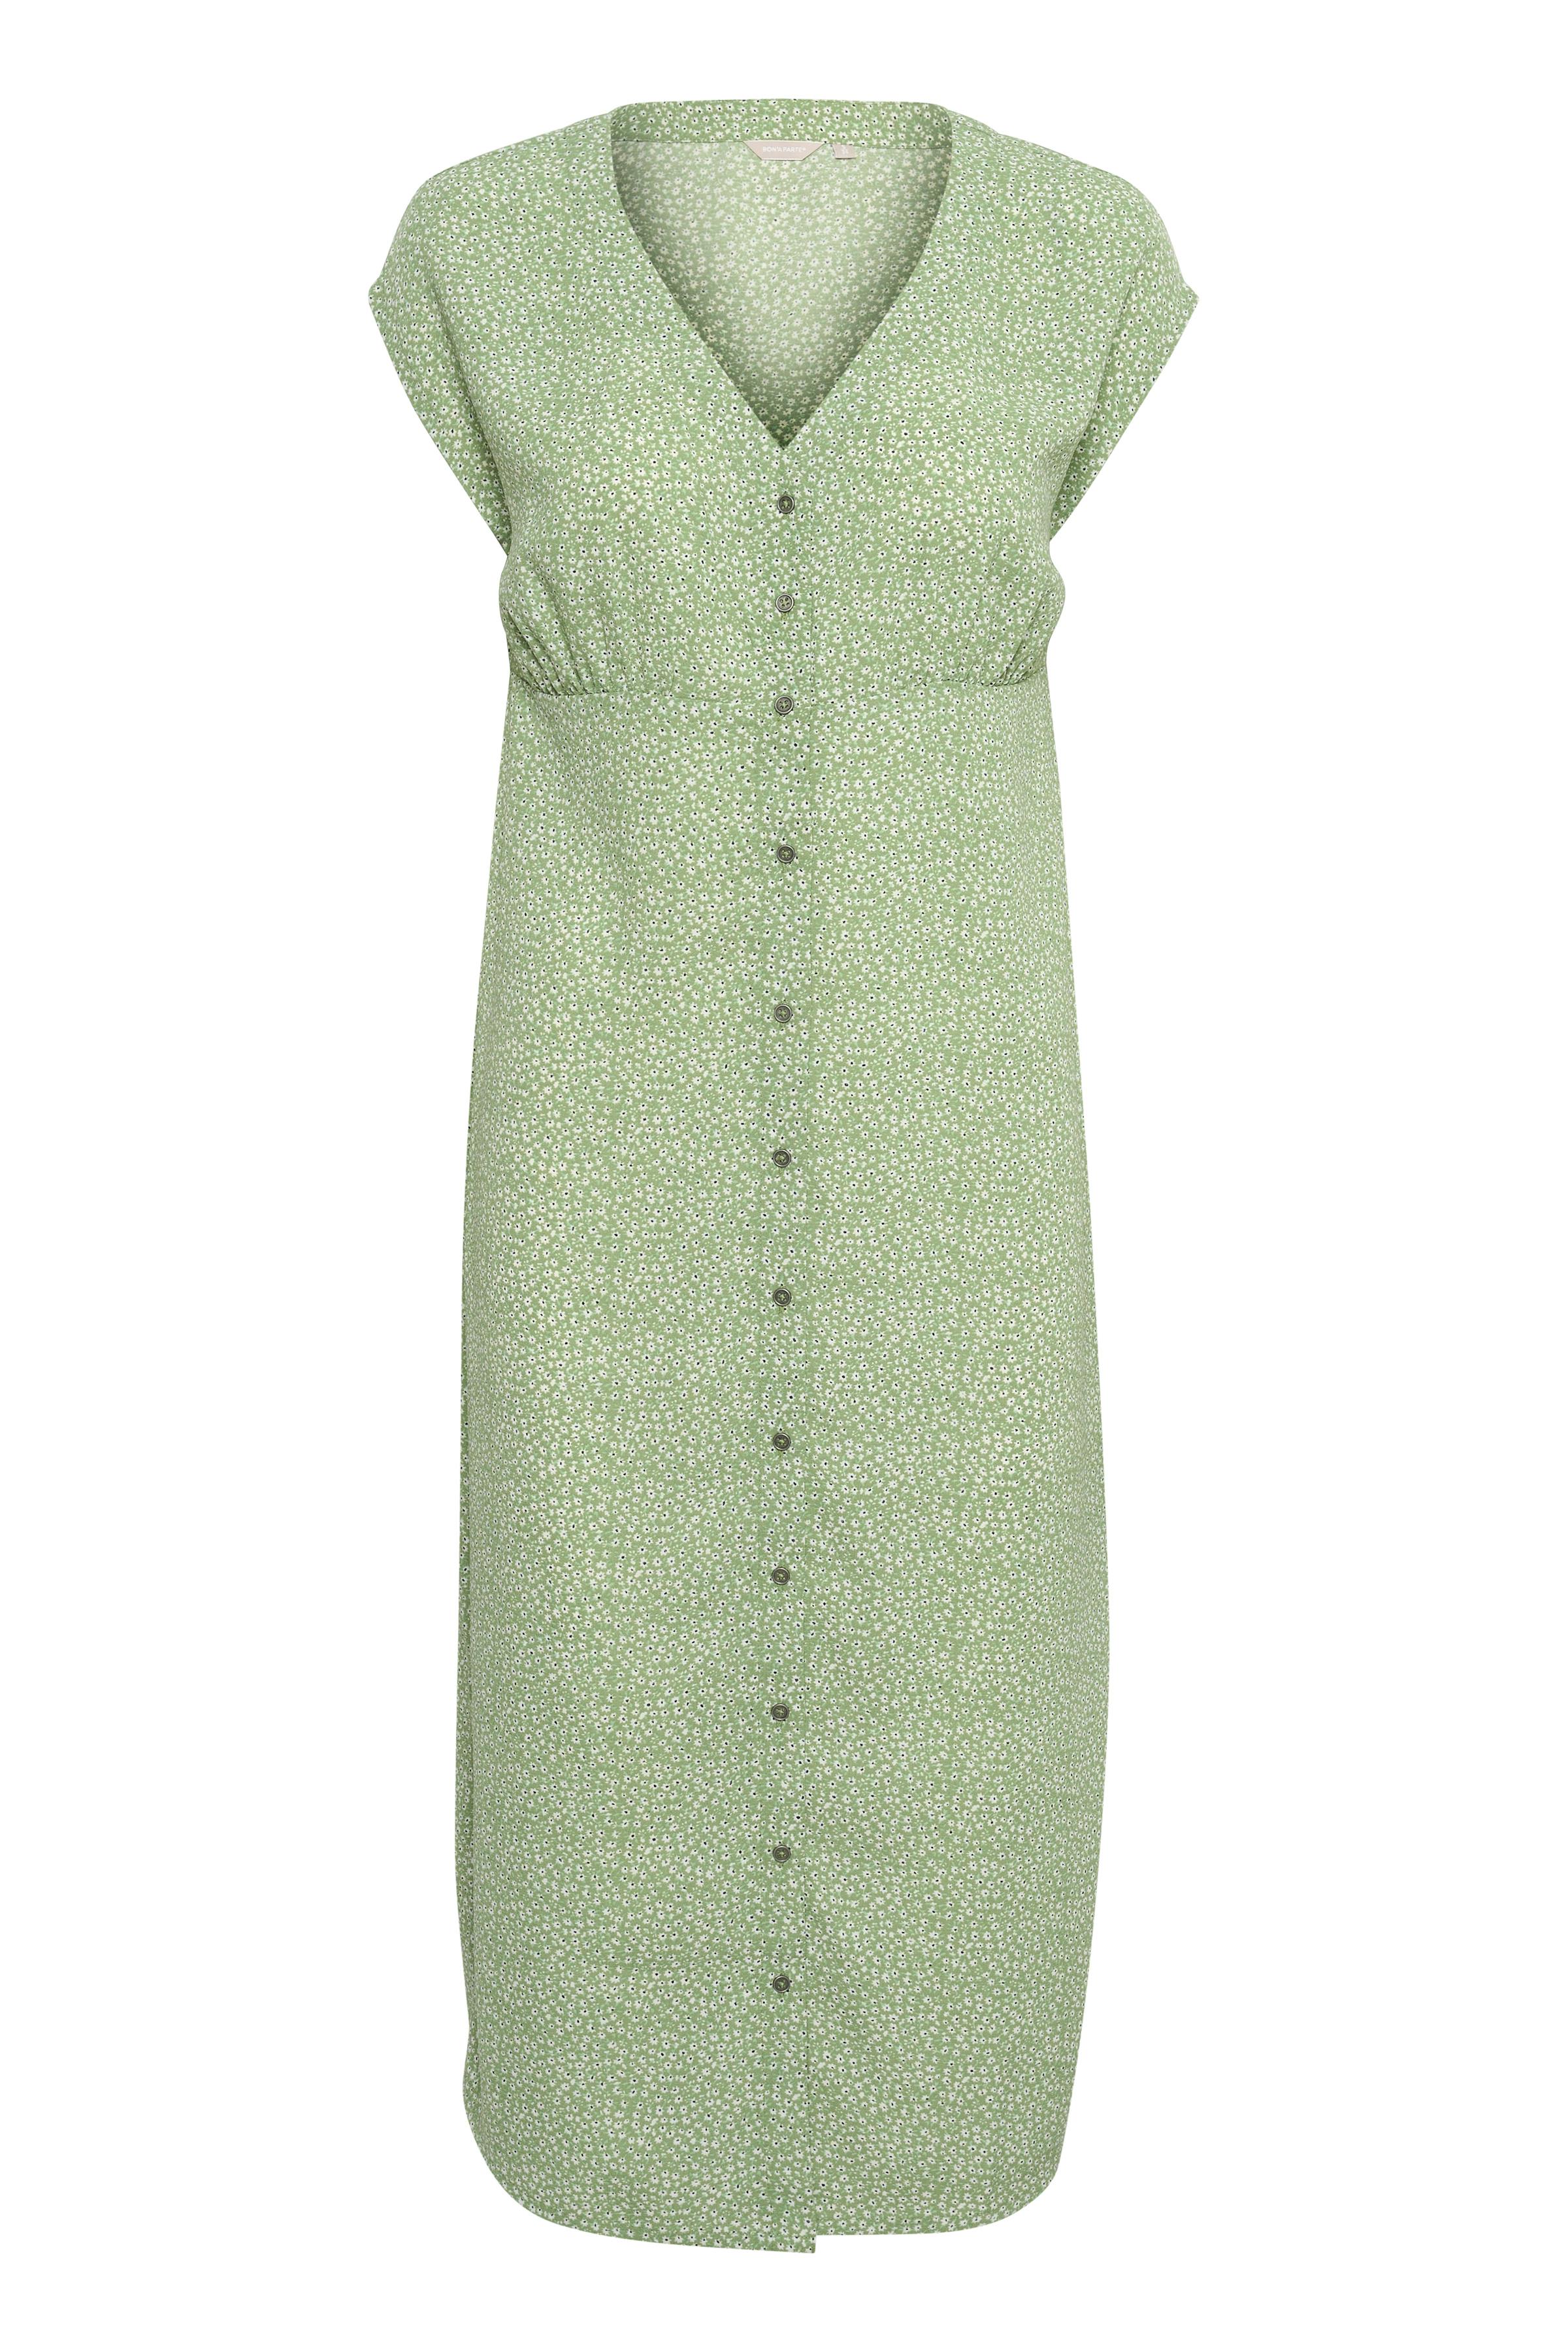 Lang grøn kjole med mønster